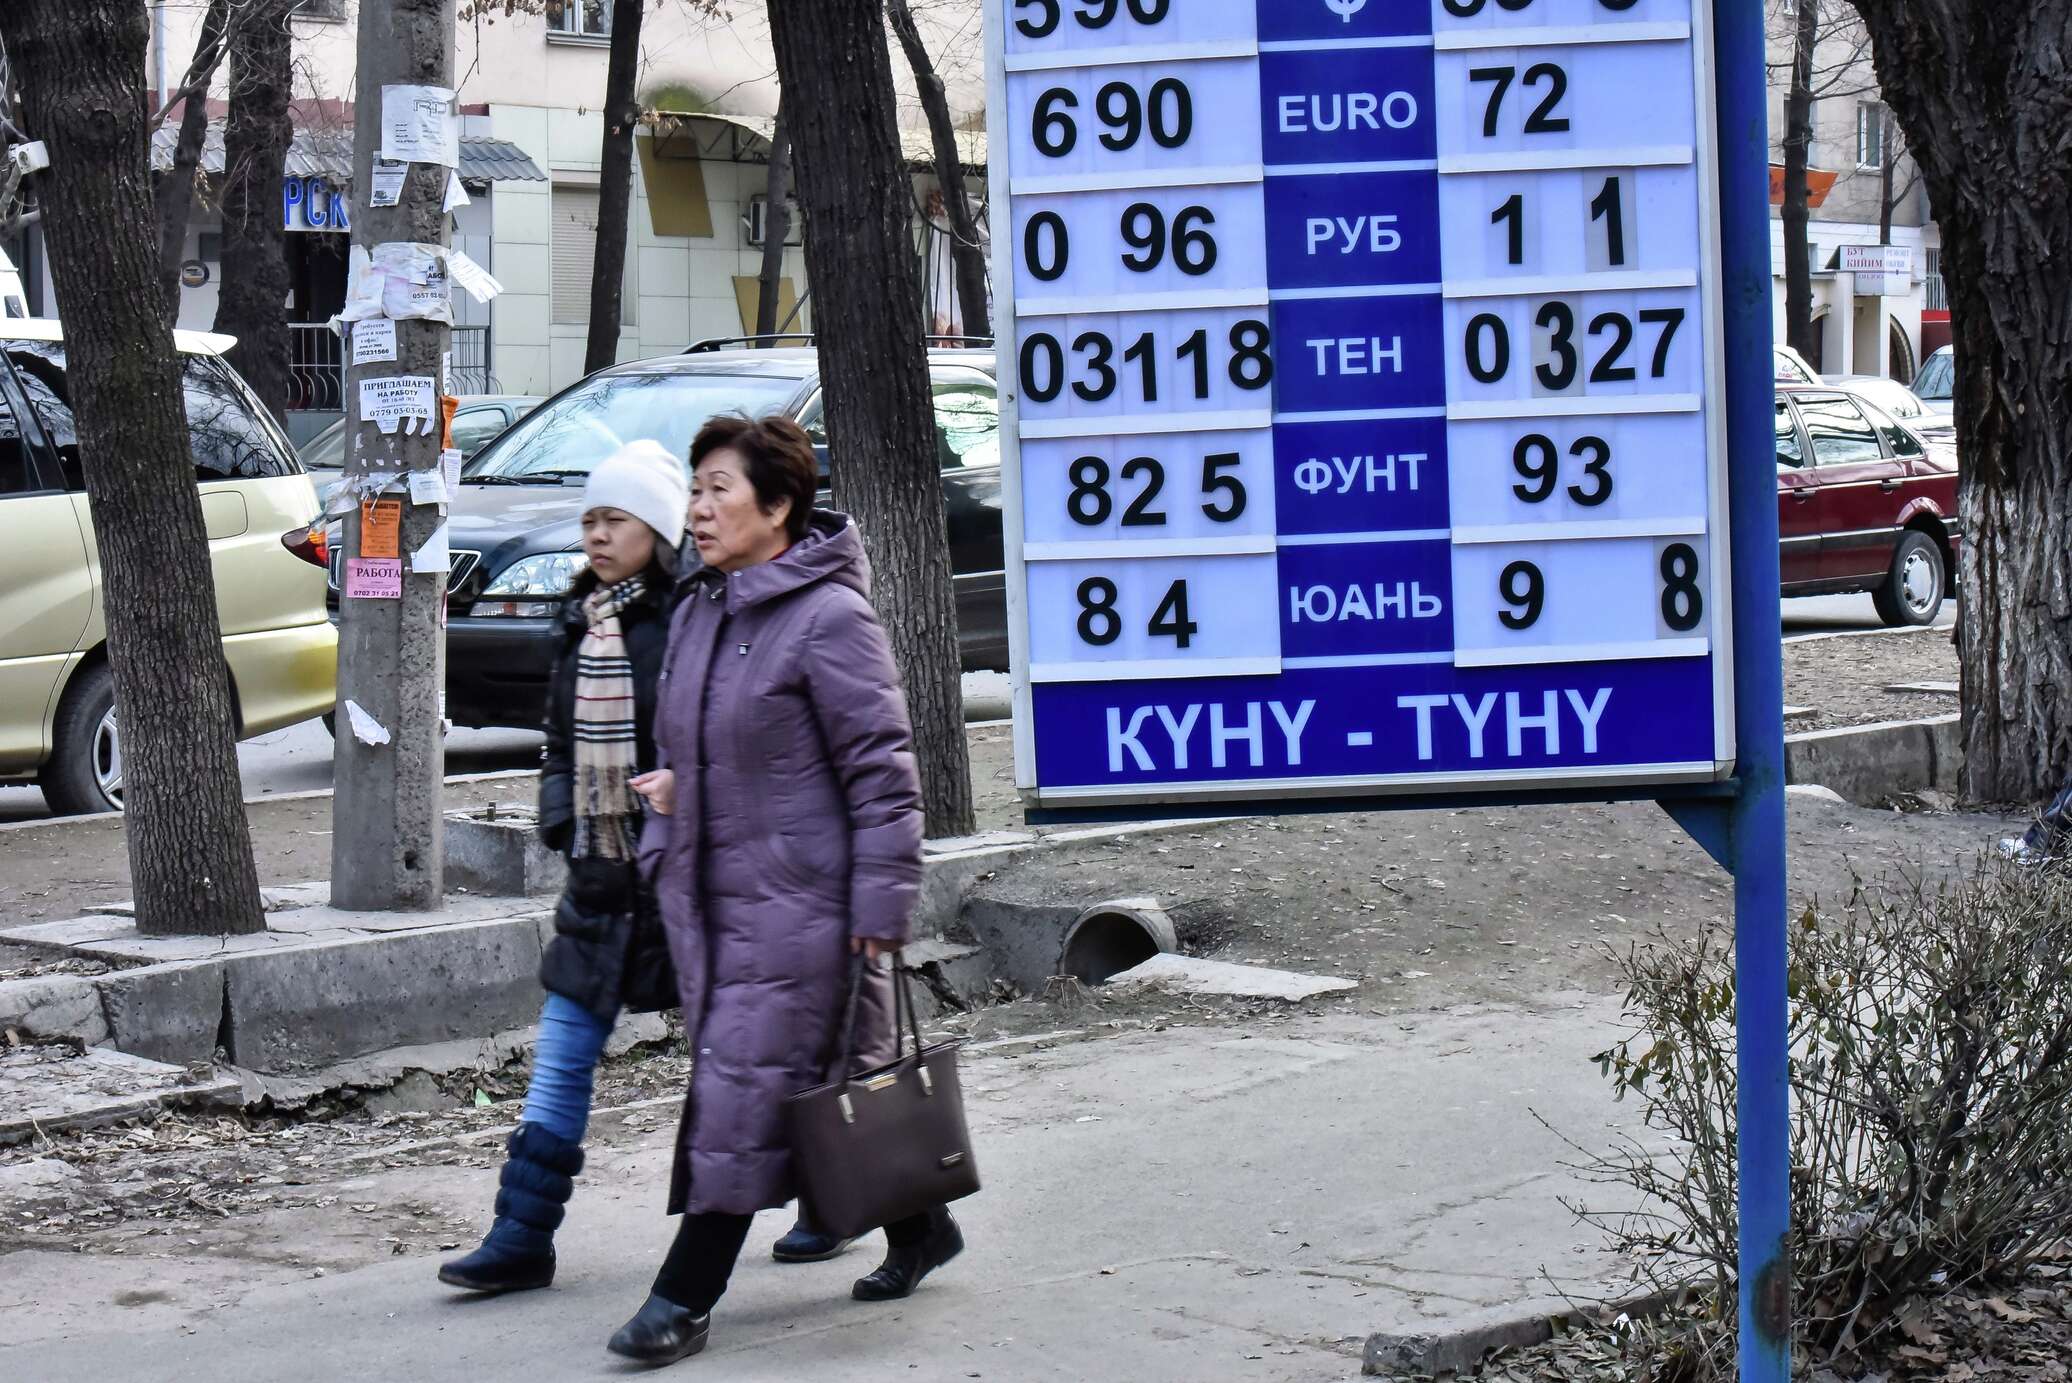 Рубль на сом бишкек сегодня в кыргызстане. Валюта Кыргызстана. Курсы валют в Кыргызстане. Курсы валют в Киргизии. Курс валют.